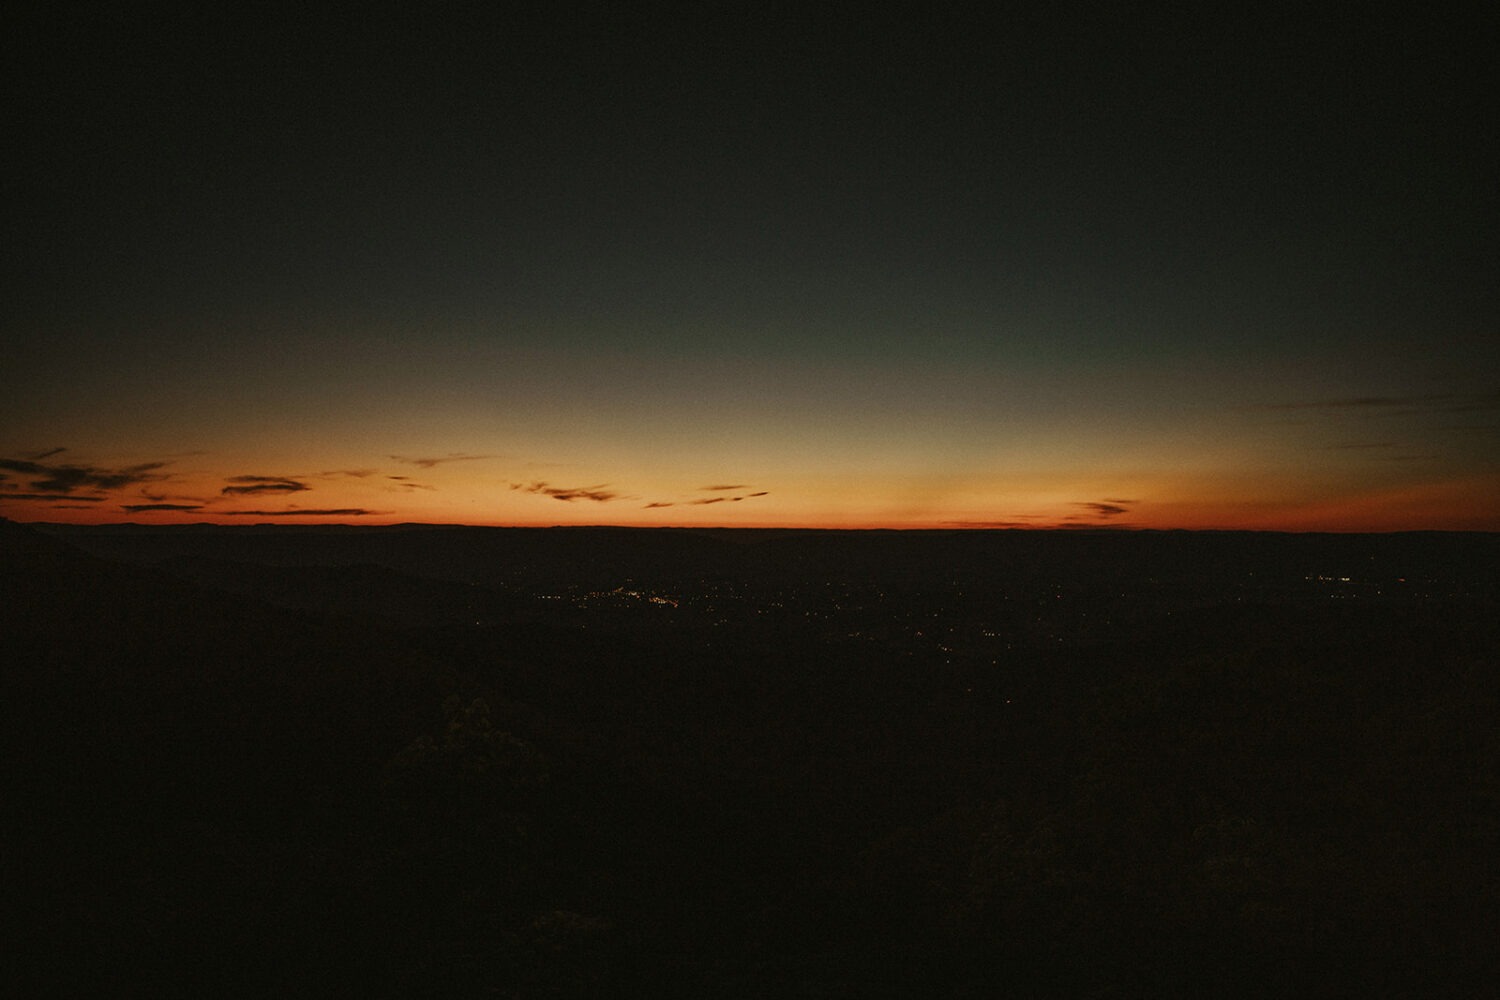 sunset over mountains at Shenandoah National Park